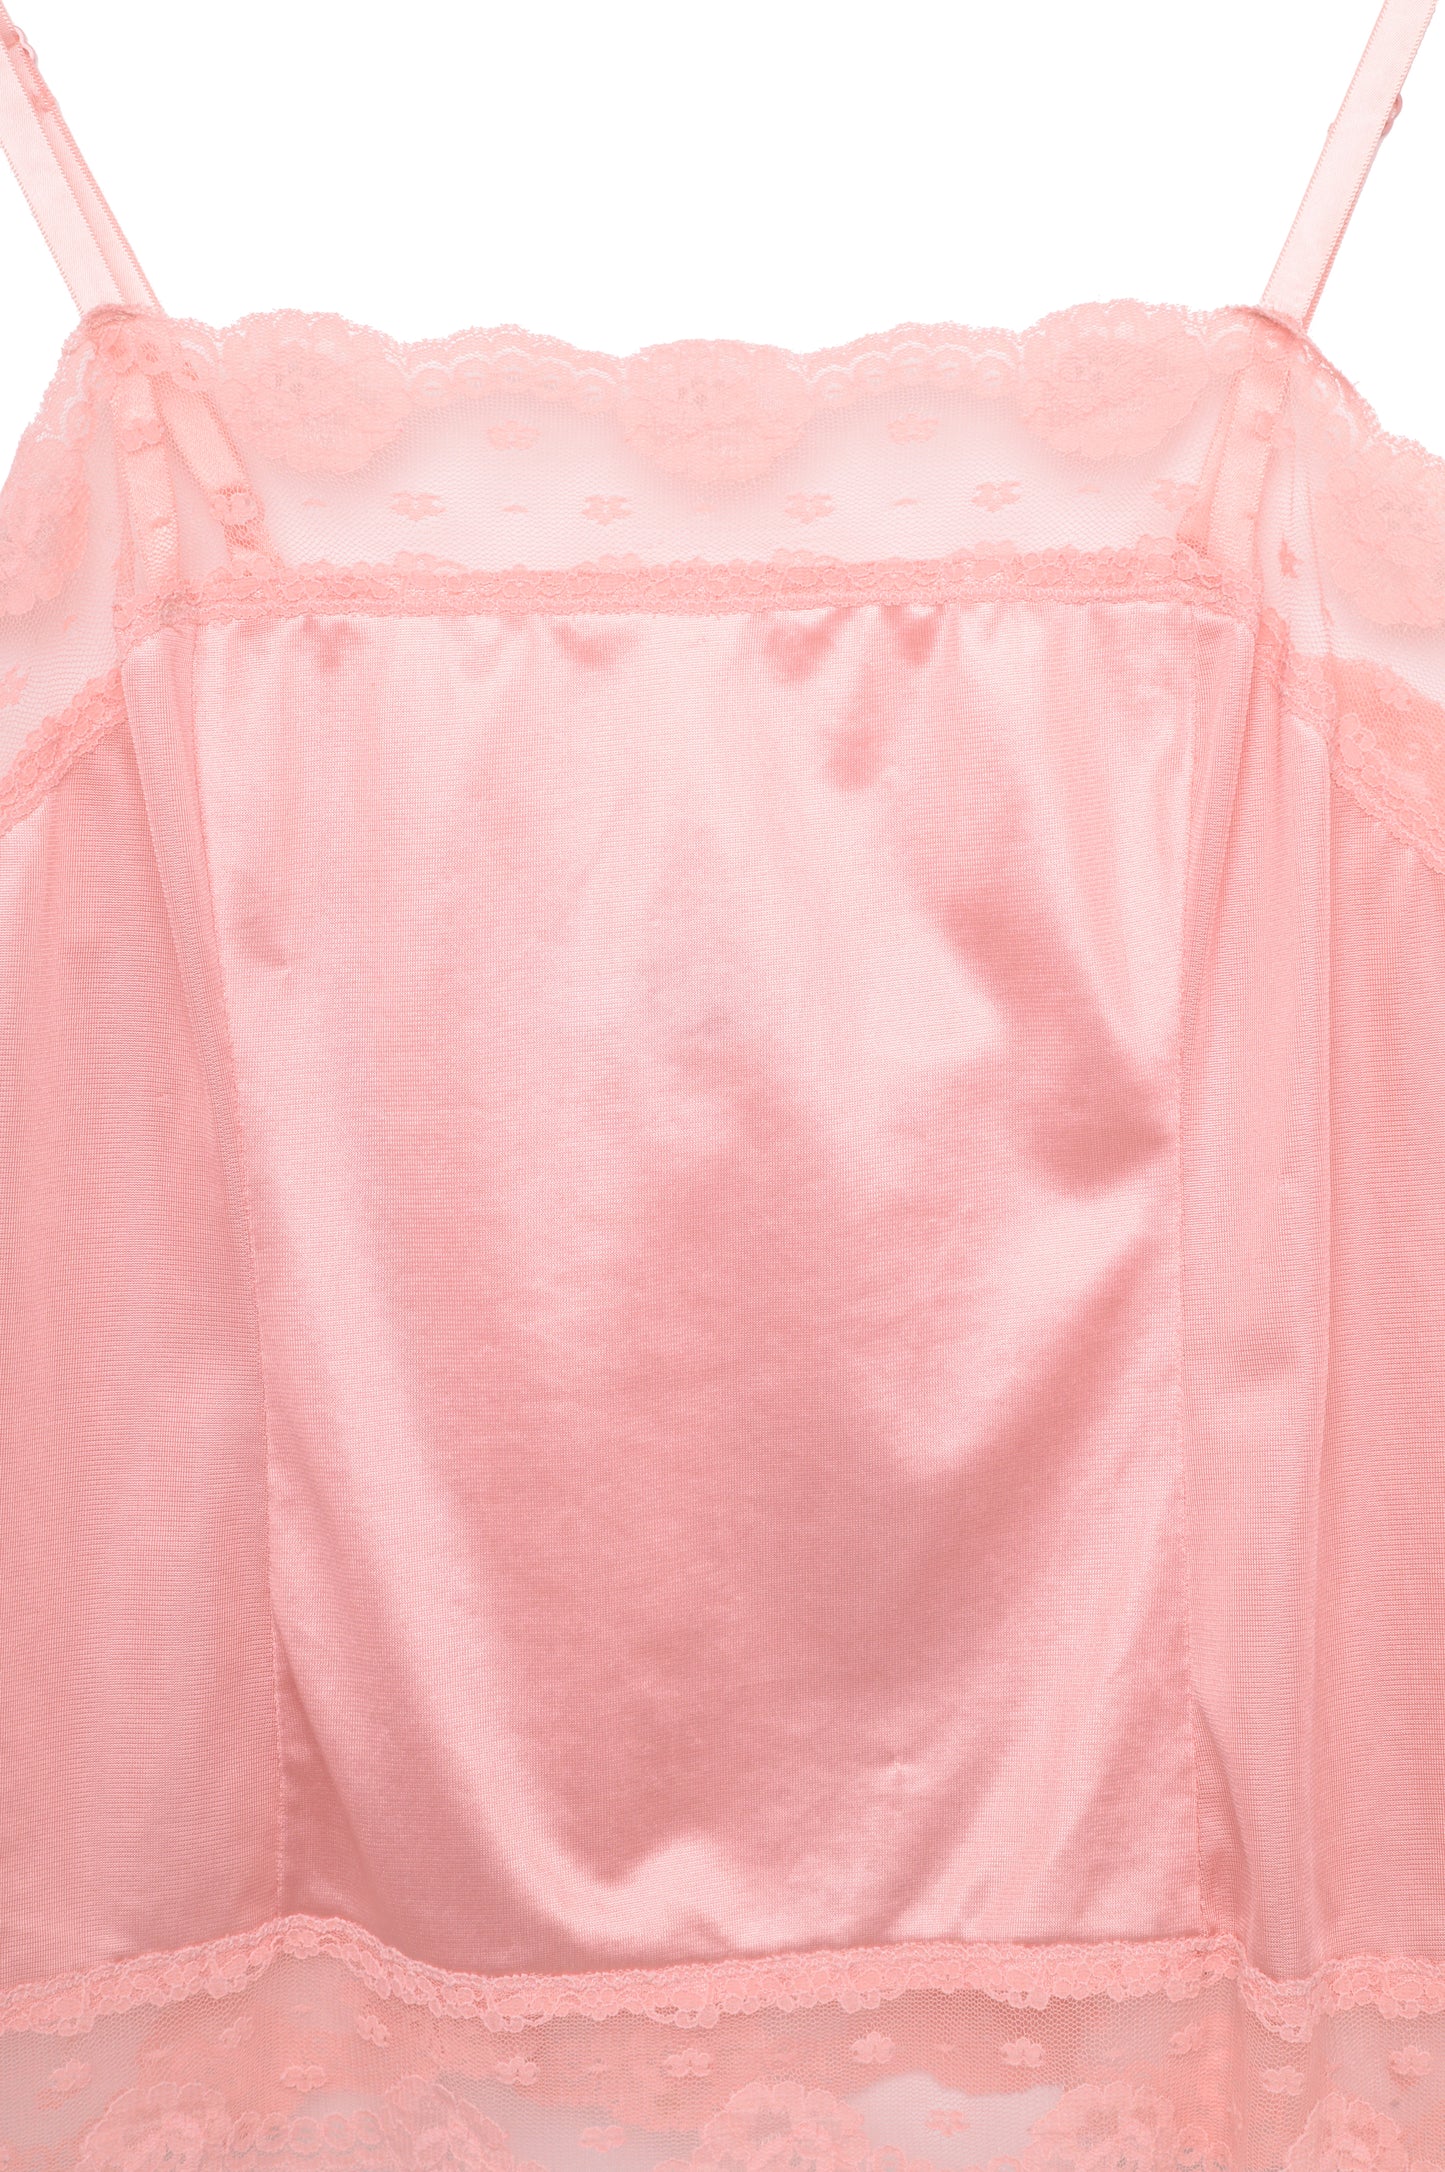 Pink Lace Trim Slip Top